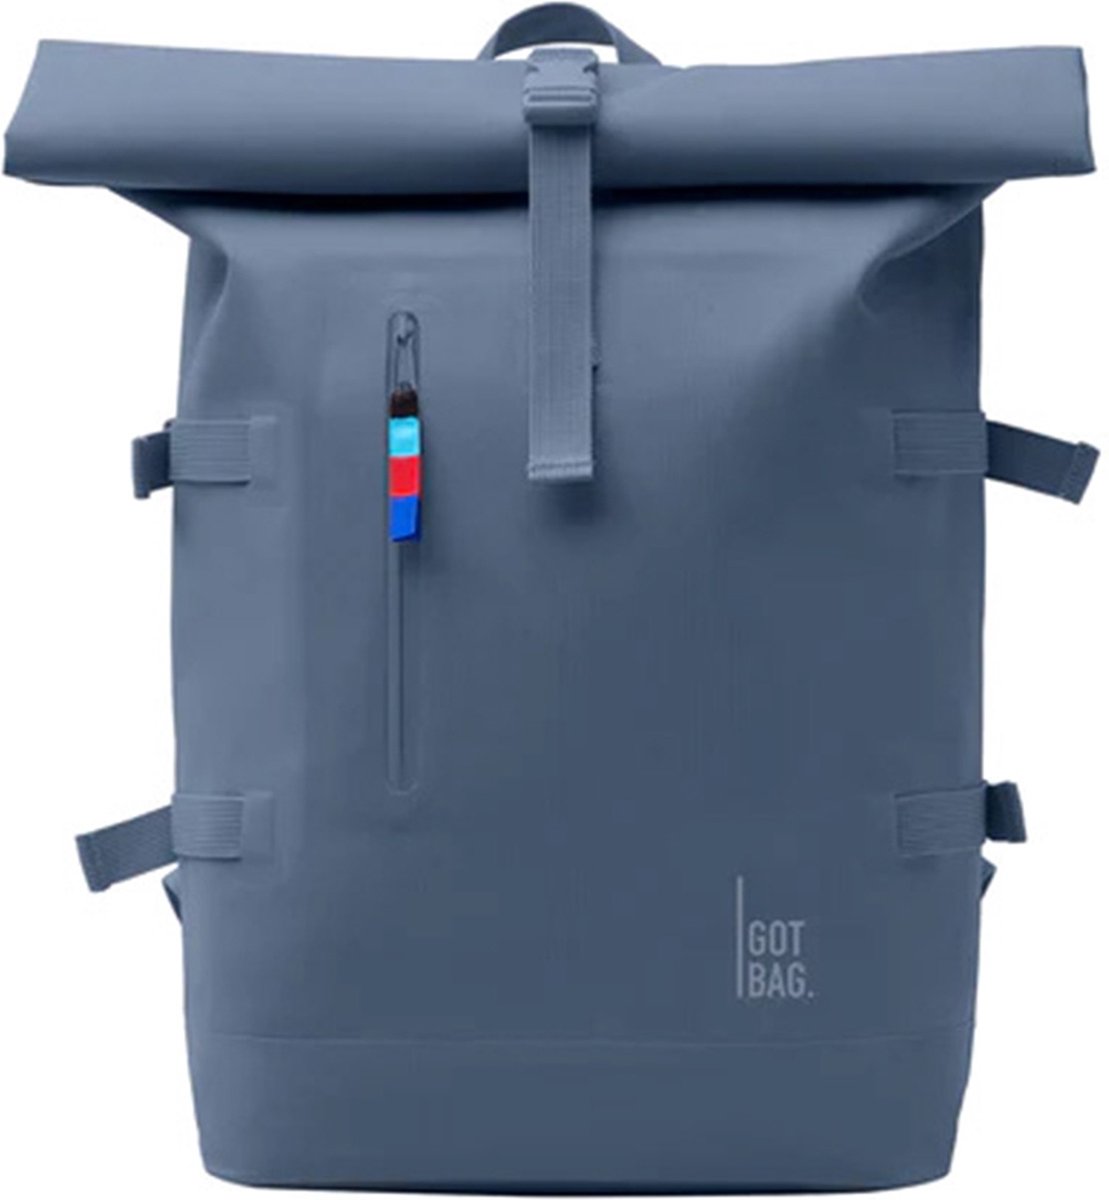 GOT BAG Laptop Rugzak / Rugtas / Laptoptas / Werktas - Rolltop - Blauw - 15 inch